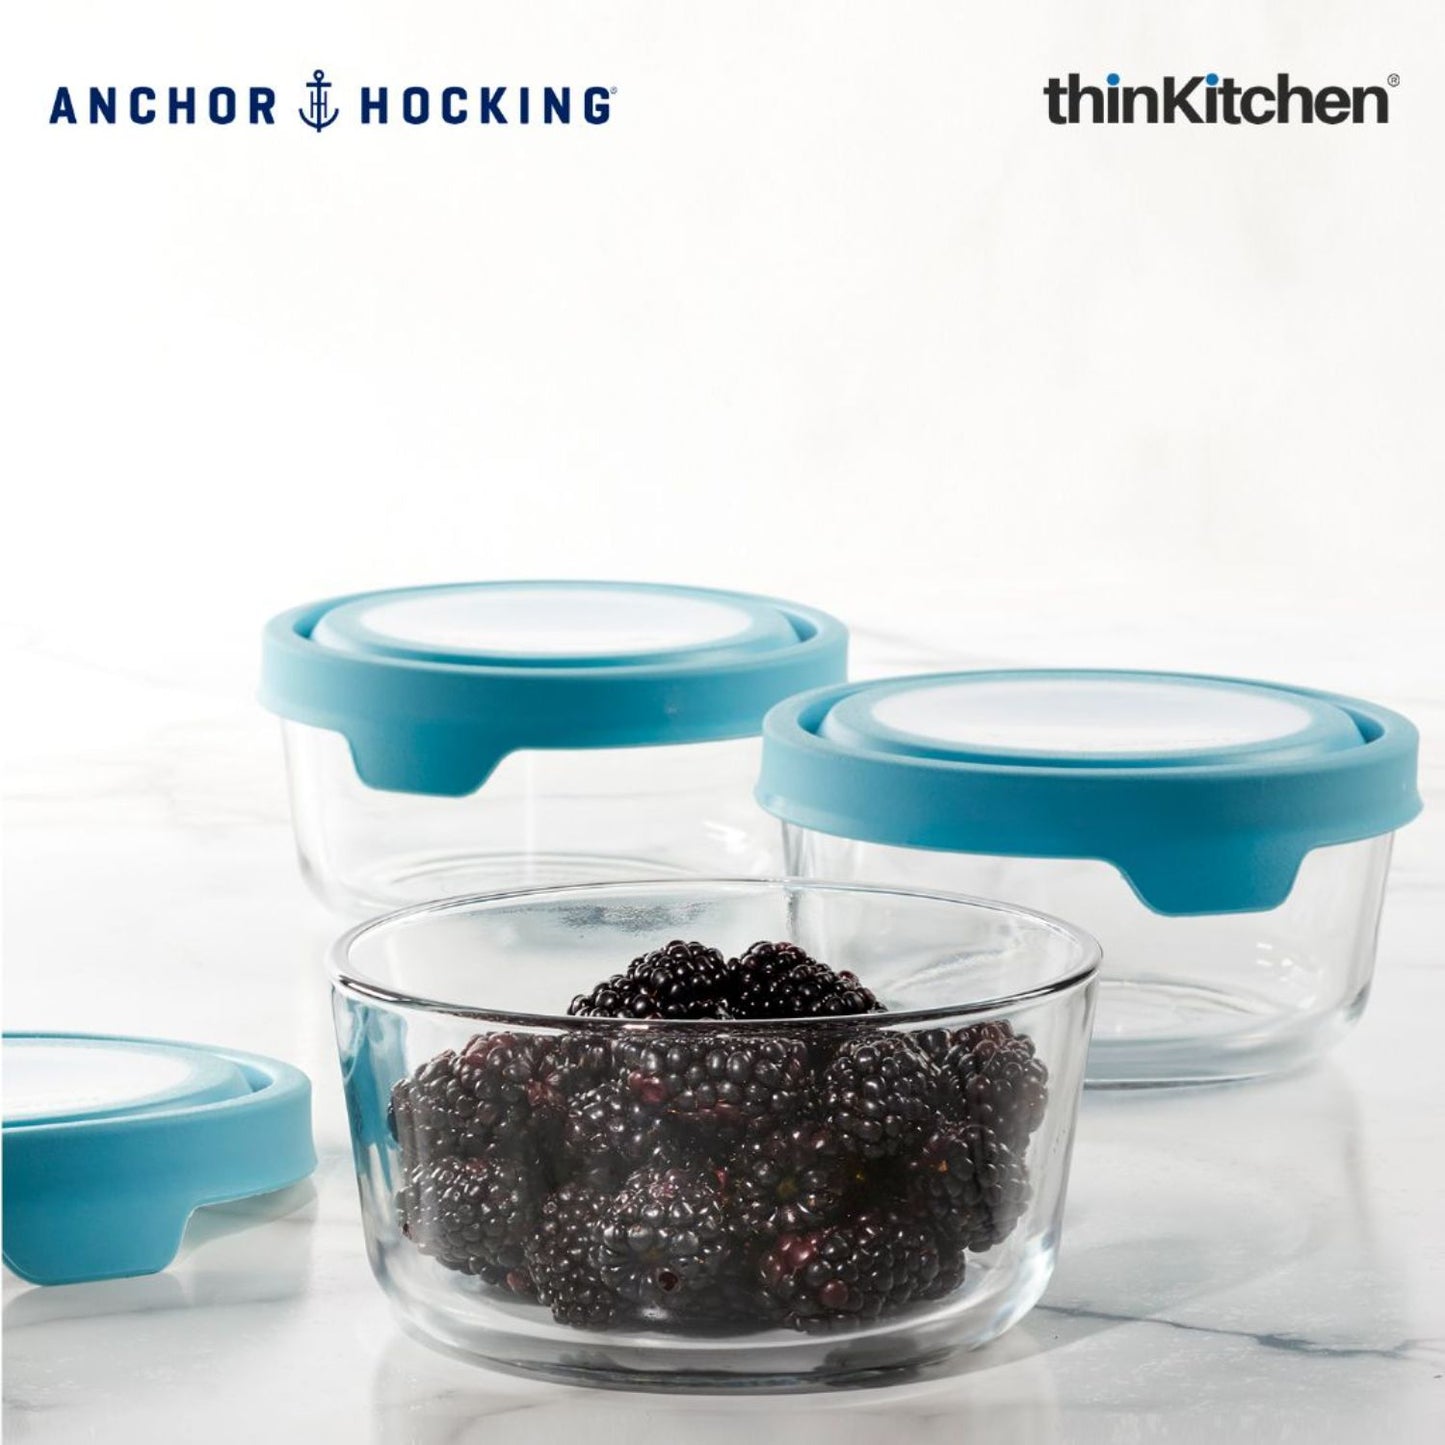 Anchor Hocking Trueseal Lid 6pcs set  Food Storage Container